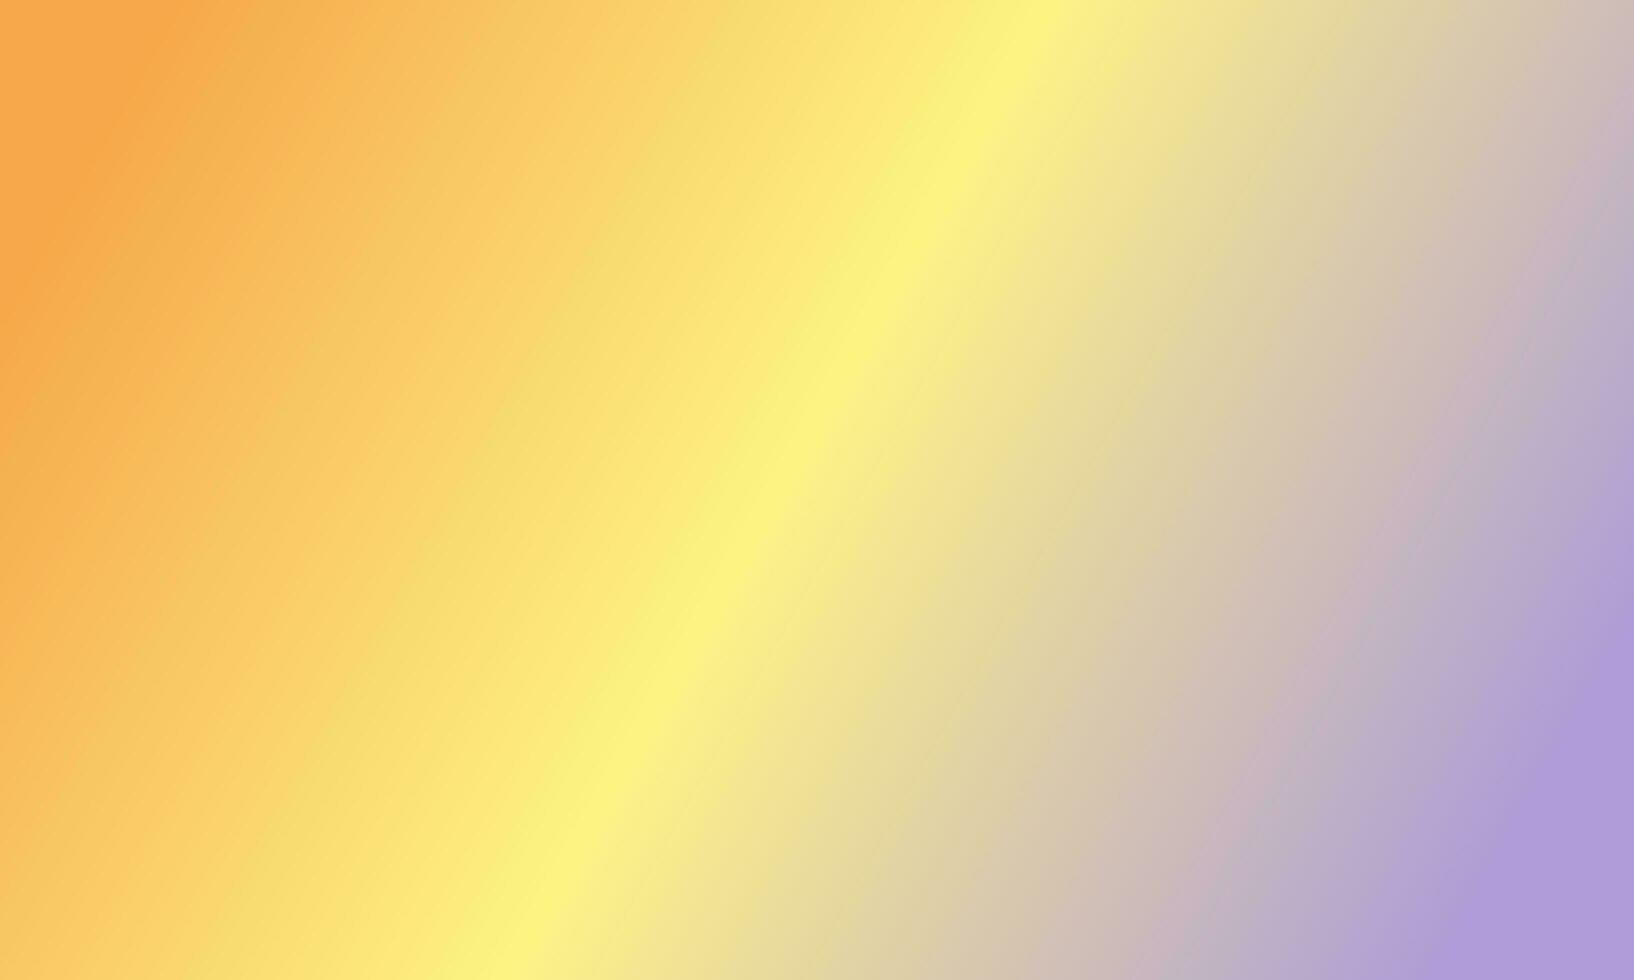 Design simple purple pastel,yellow and orange gradient color illustration background photo